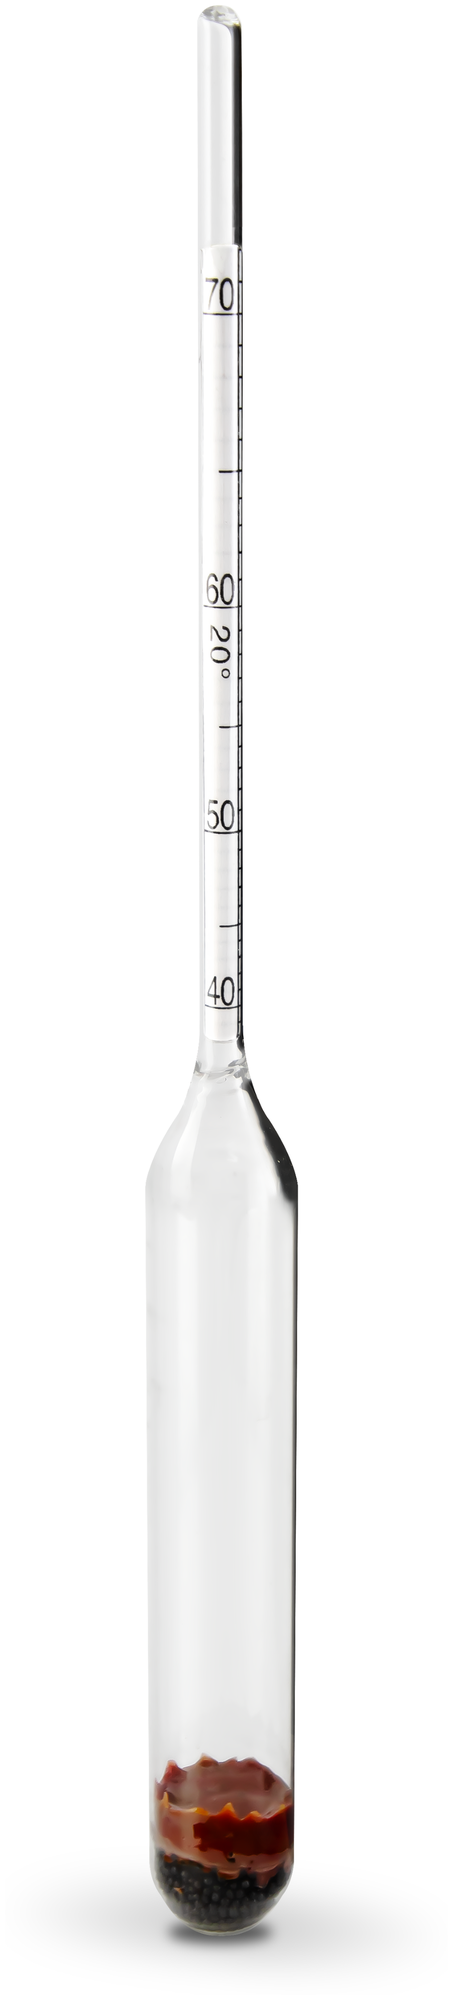 Ареометр-спиртометр 40-70 градусов